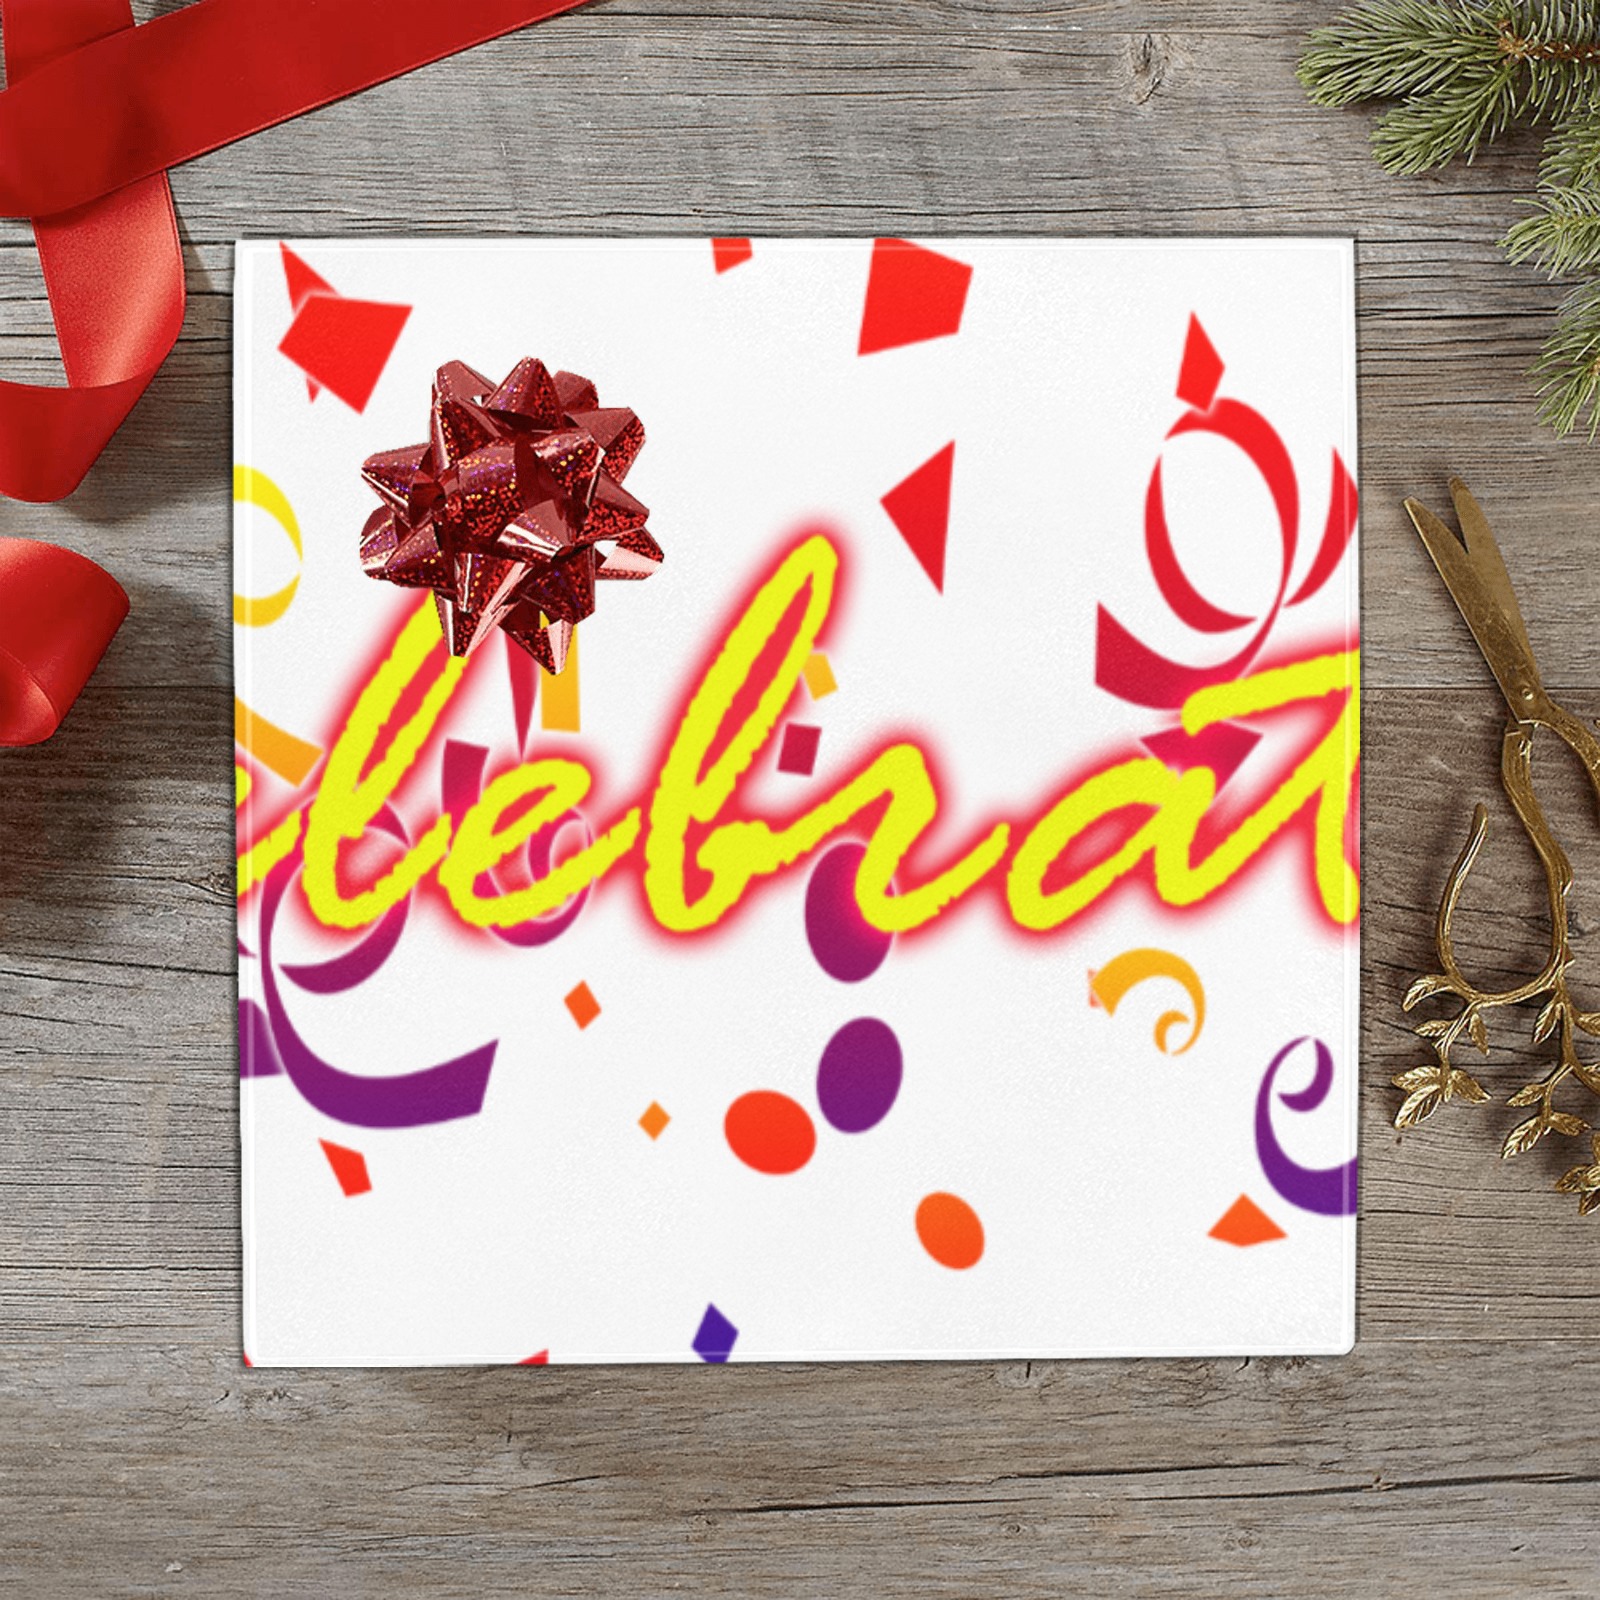 Celebrate Confetti Gift Wrapping Paper 58"x 23" (5 Rolls)